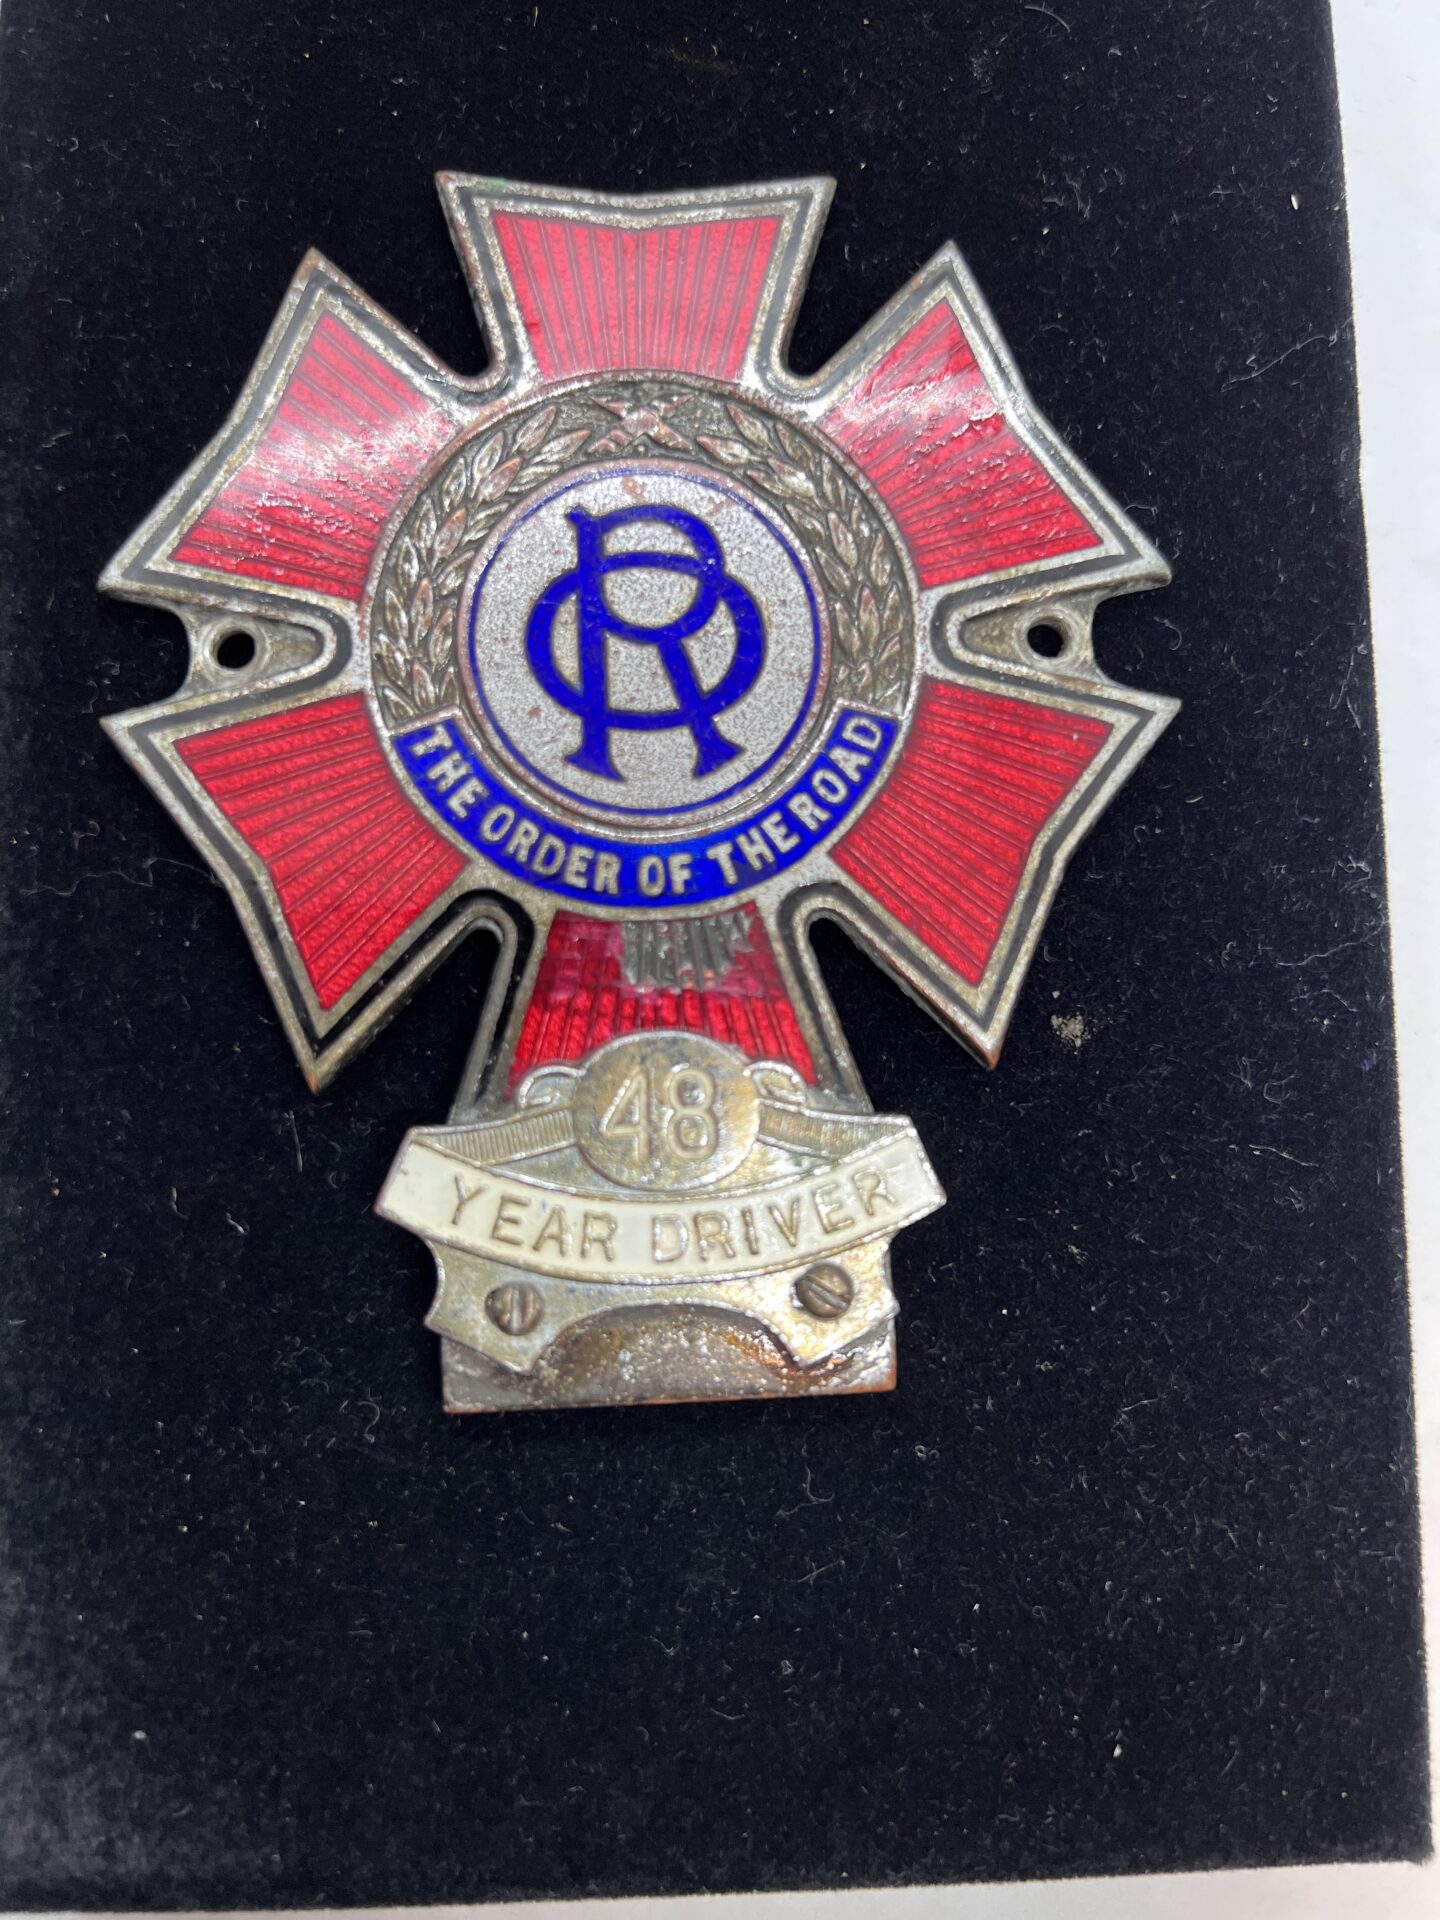 Vintage order of the road enamel car emblem badge - RUSTIC RETRO